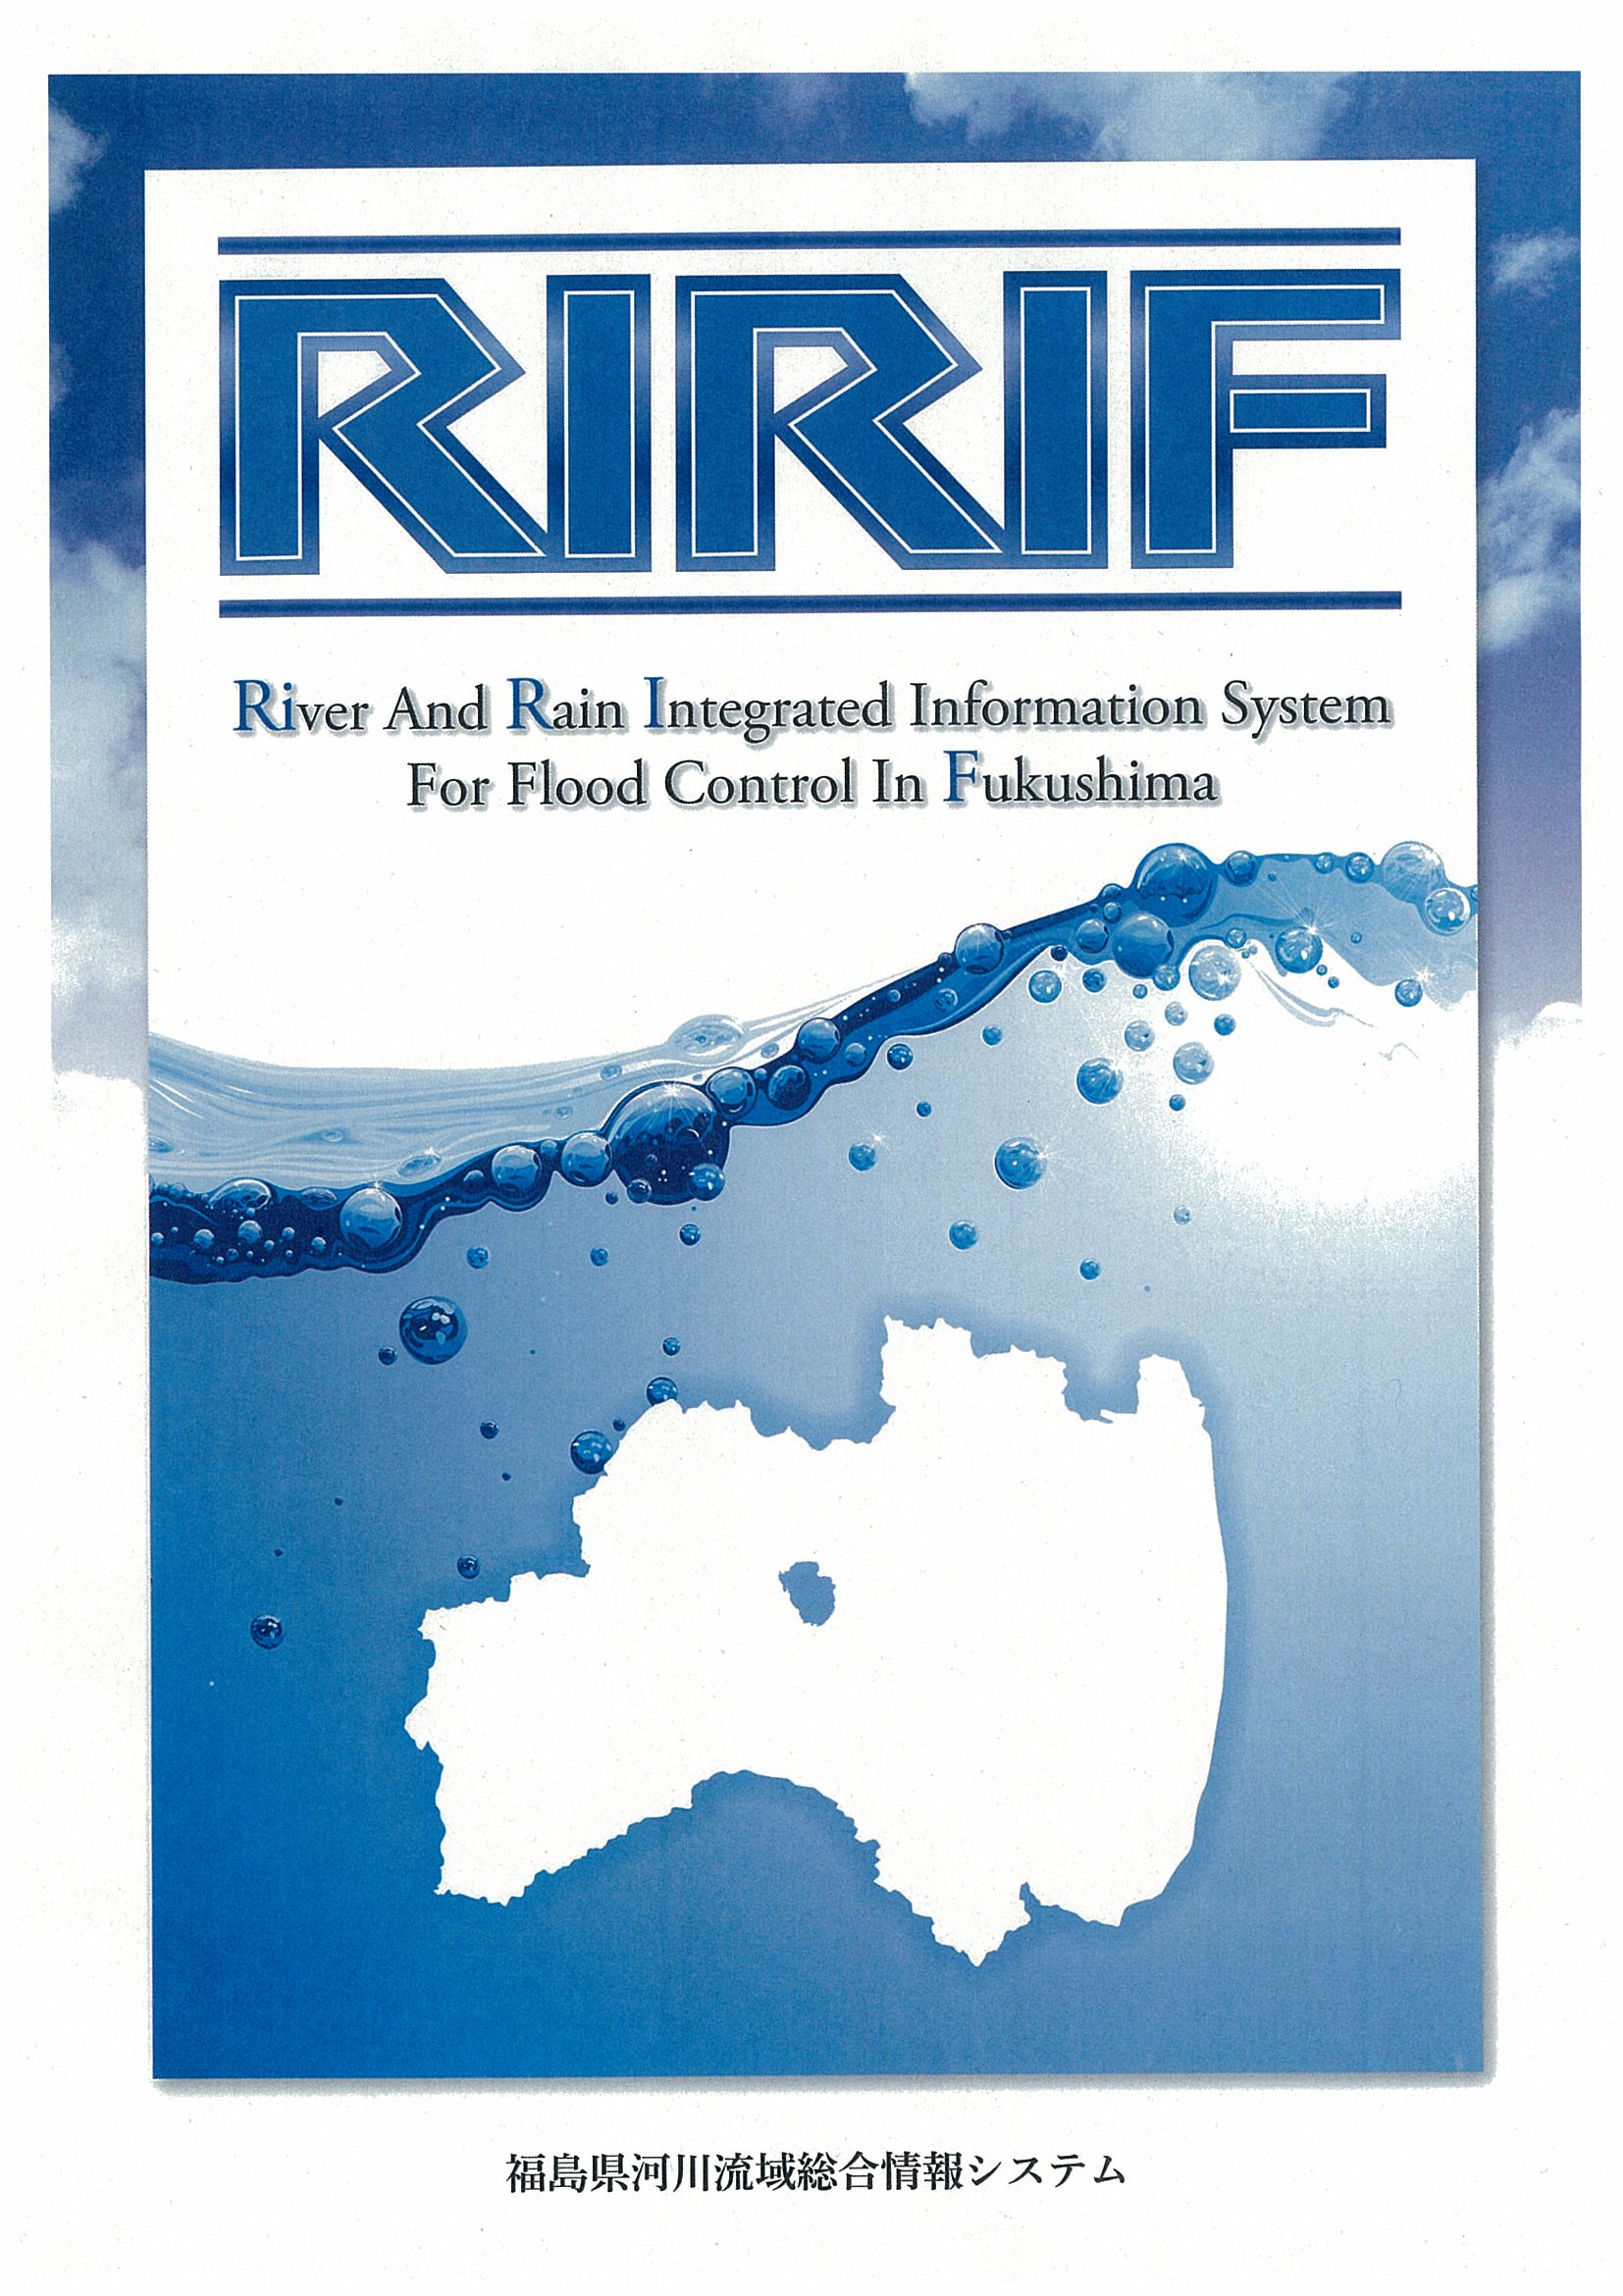 RIRFのパンプレット表紙です。